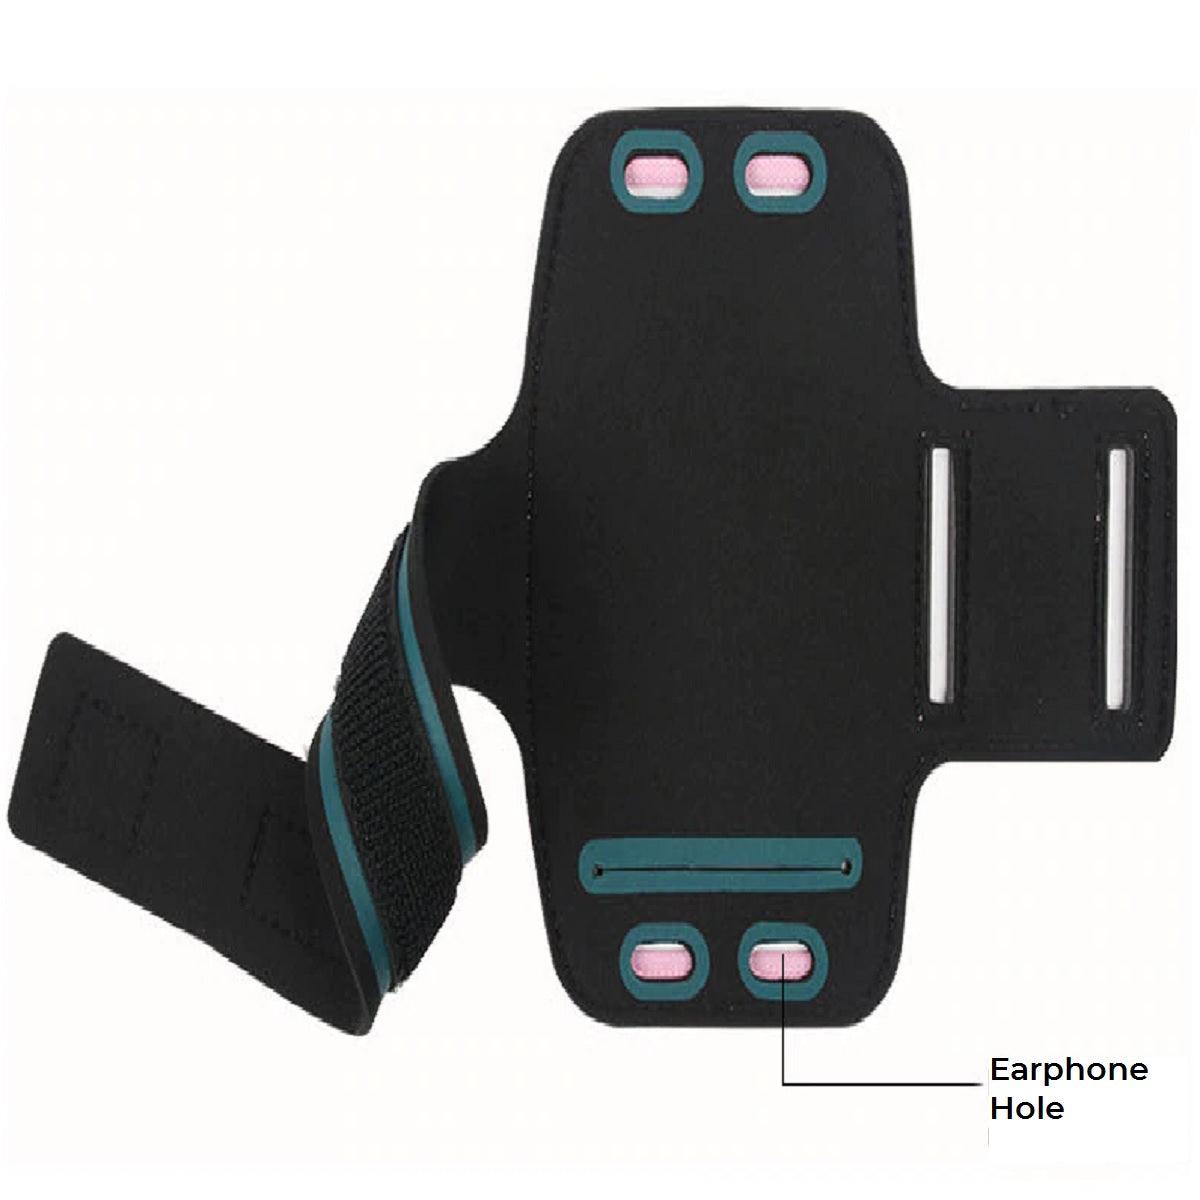 Sport Armband Case 5.5 6.0 inch phone fashion holder for women's on hand smartphone handbags sling Running Gym Arm Band Fitness - dealskart.com.au